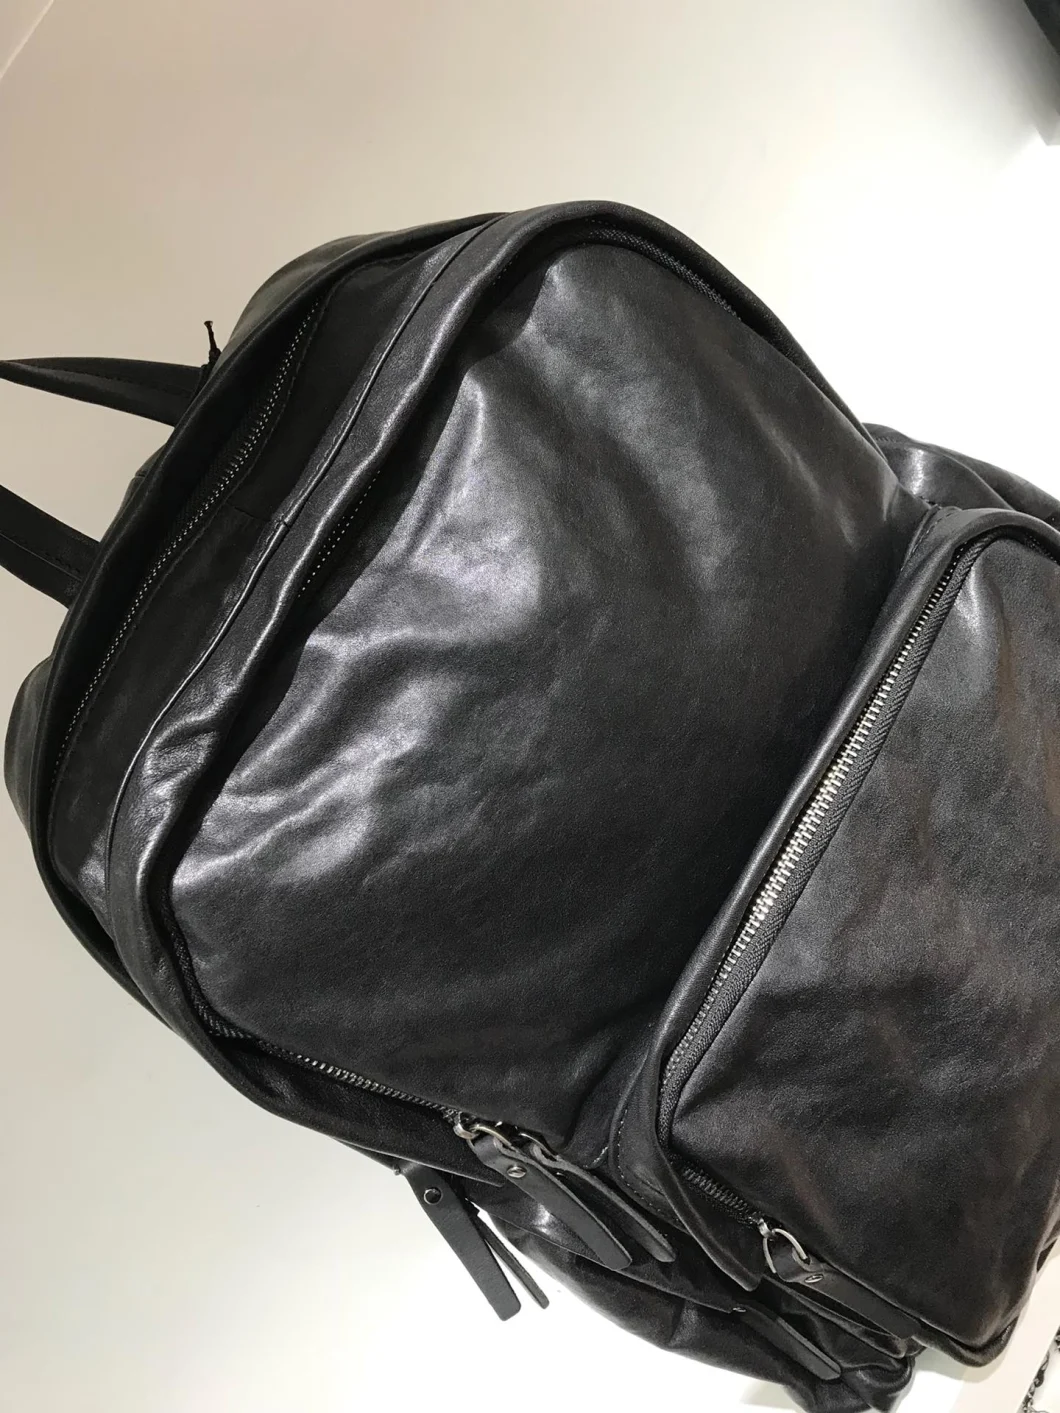 Luxury Black Genuine Leather Diaper Bags Bagpack Backpack for Men